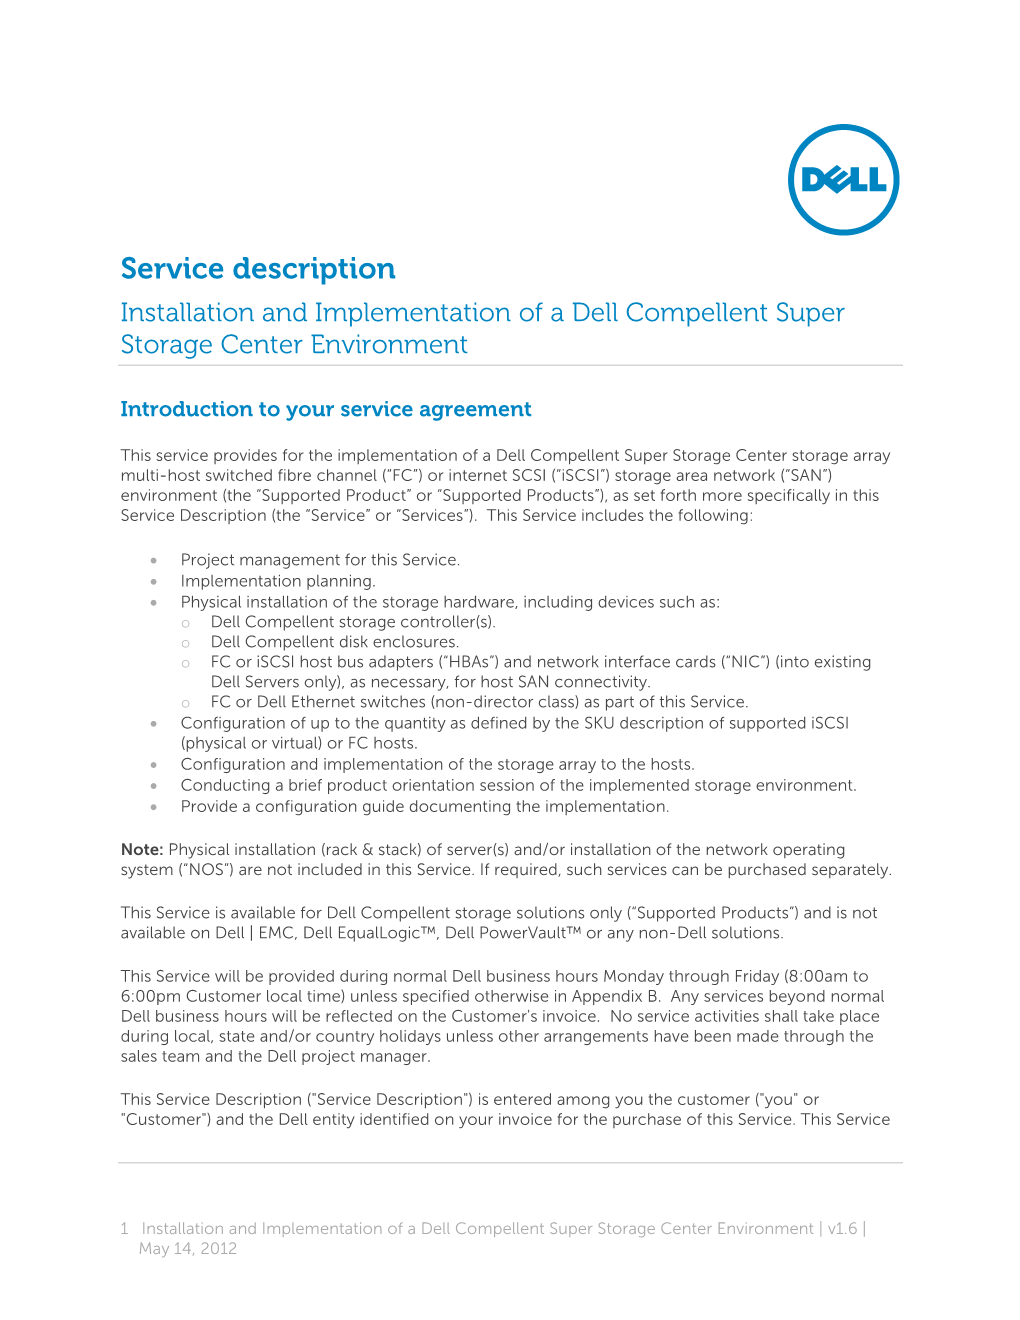 Service Description Installation and Implementation of a Dell Compellent Super Storage Center Environment